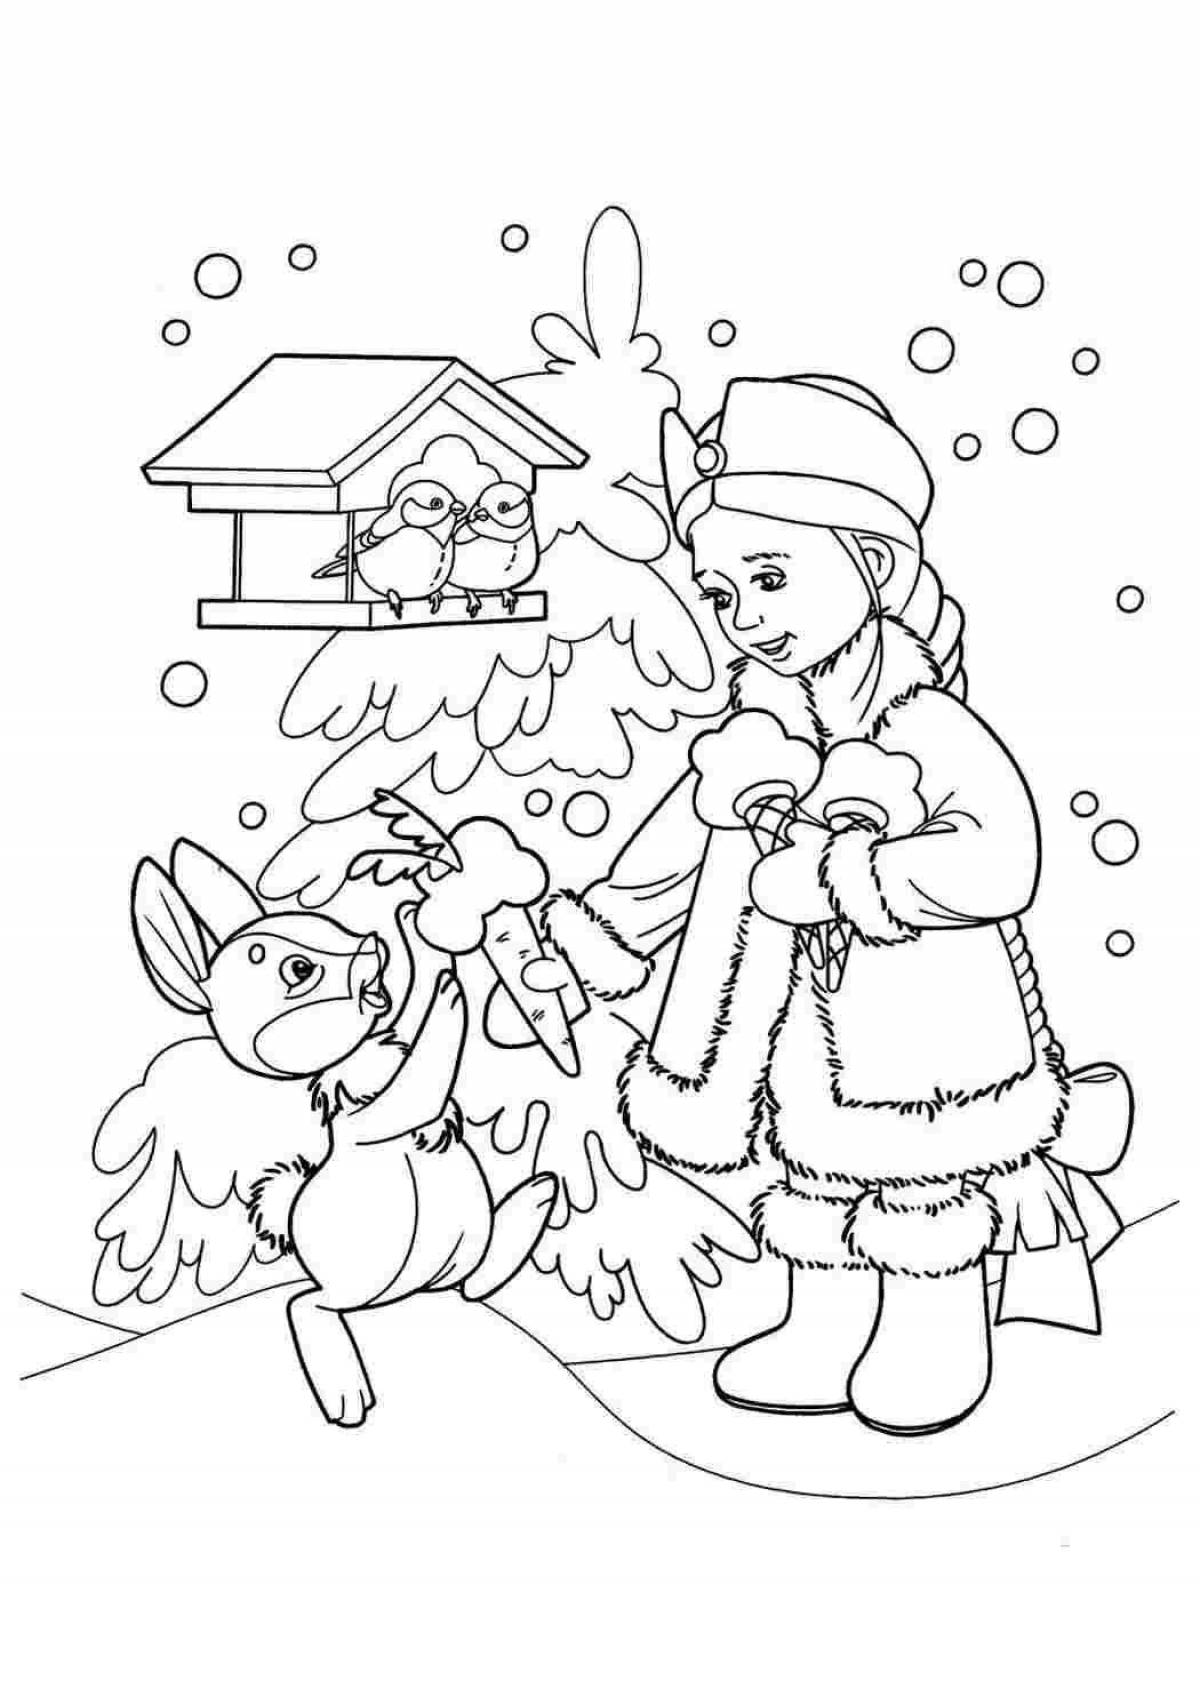 Joyful coloring of the snow maiden